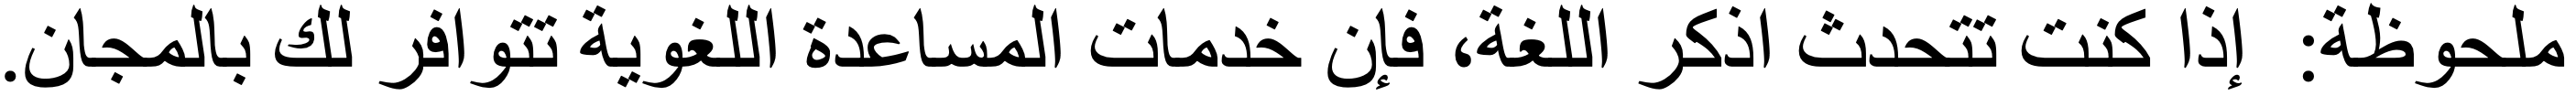 Arabic Translation of Language Assistance Services